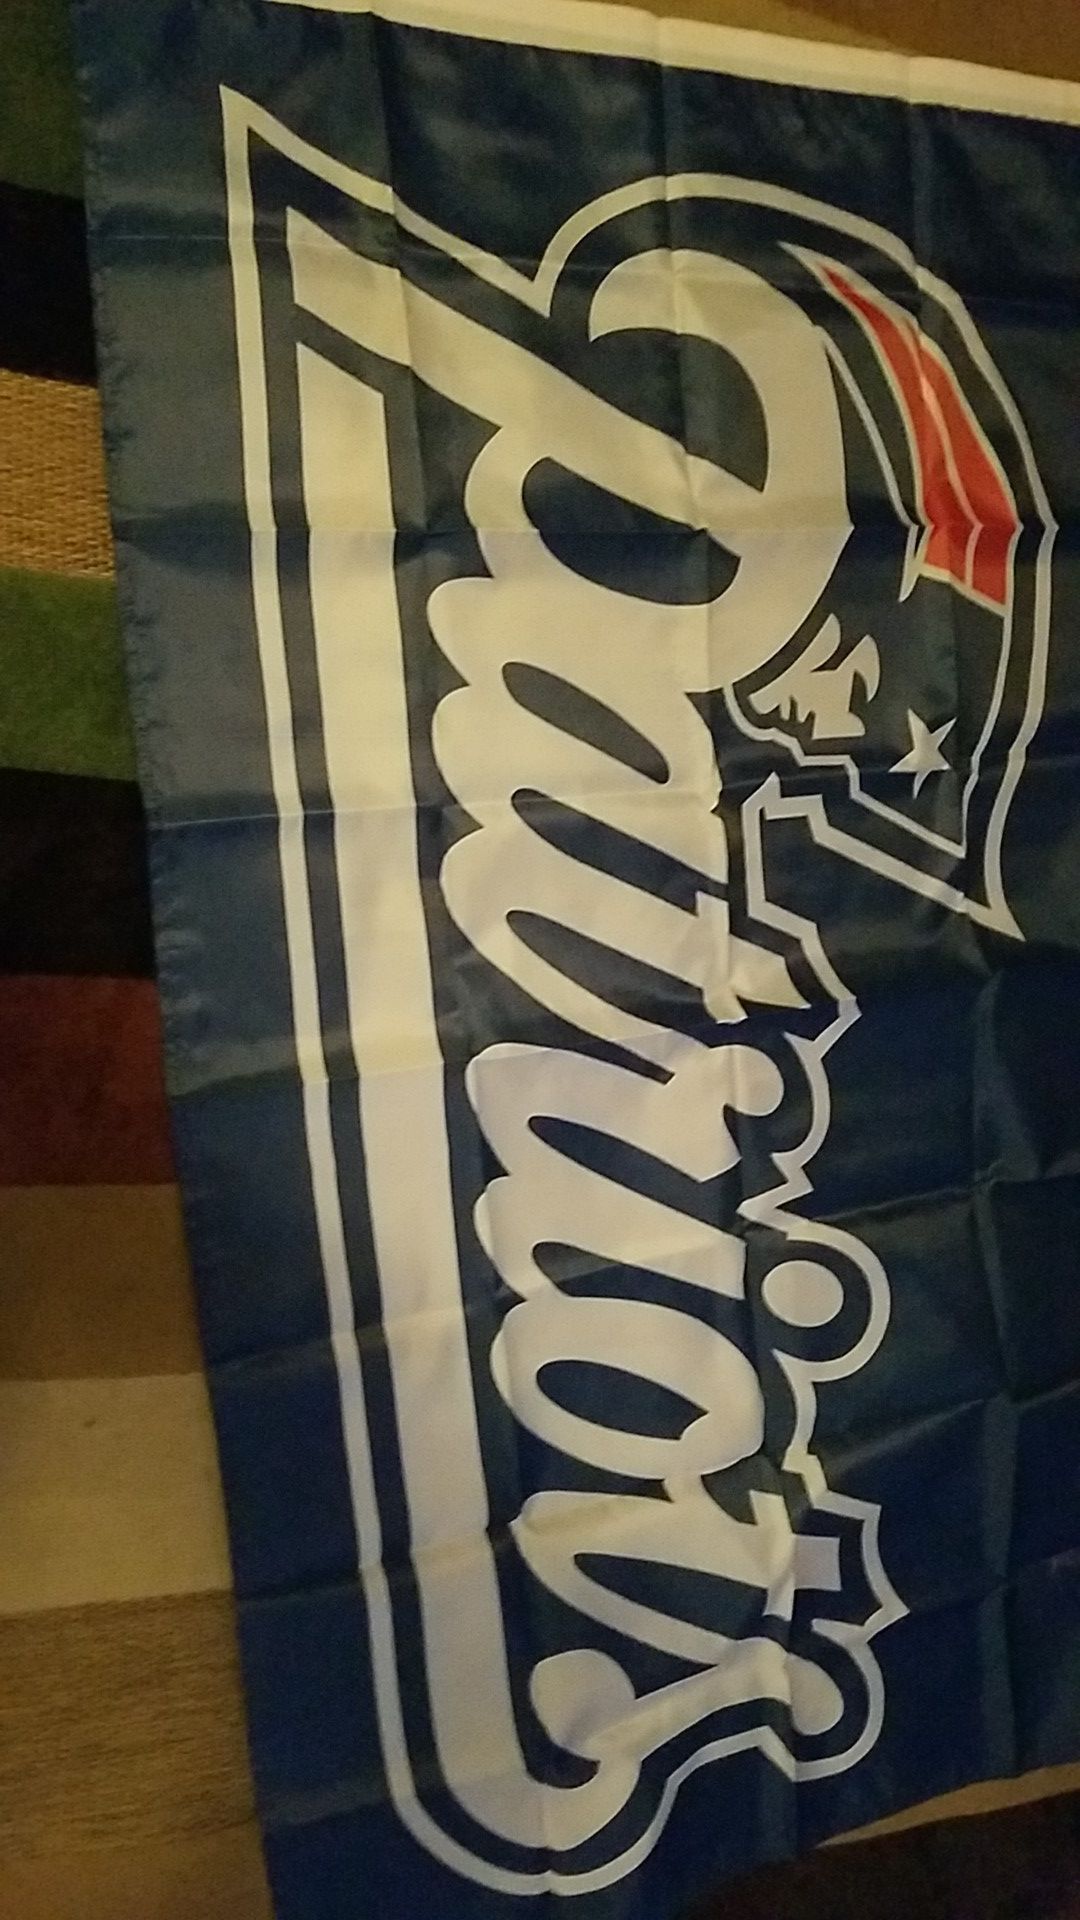 New NFL 3x5 custom New England Patriots flag